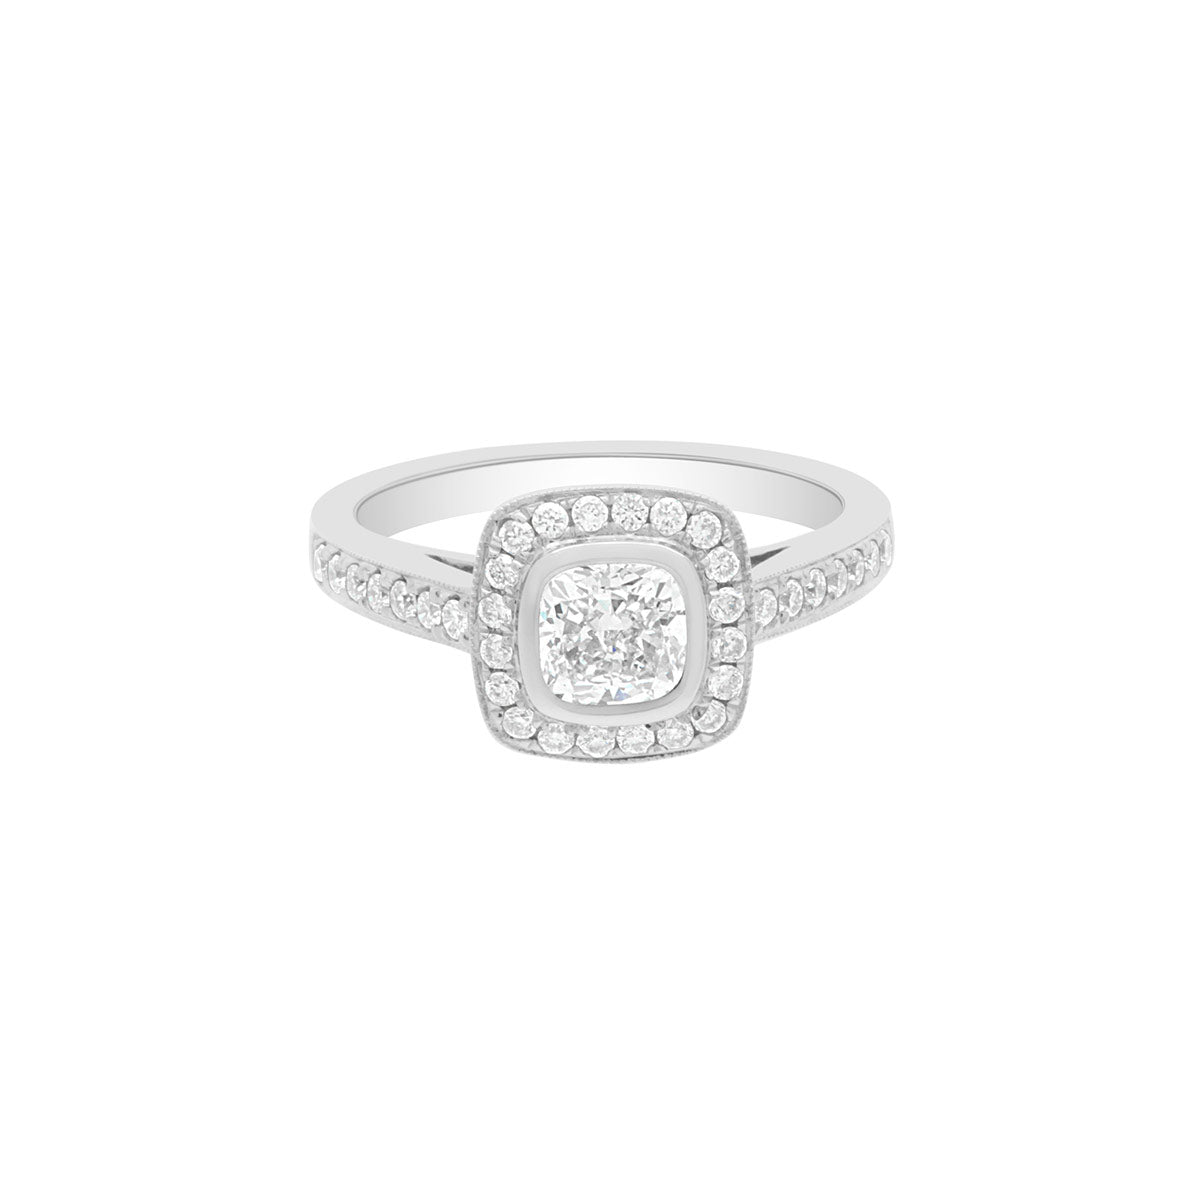 Bezel Set Cushion Cut Engagement Ring in platinum